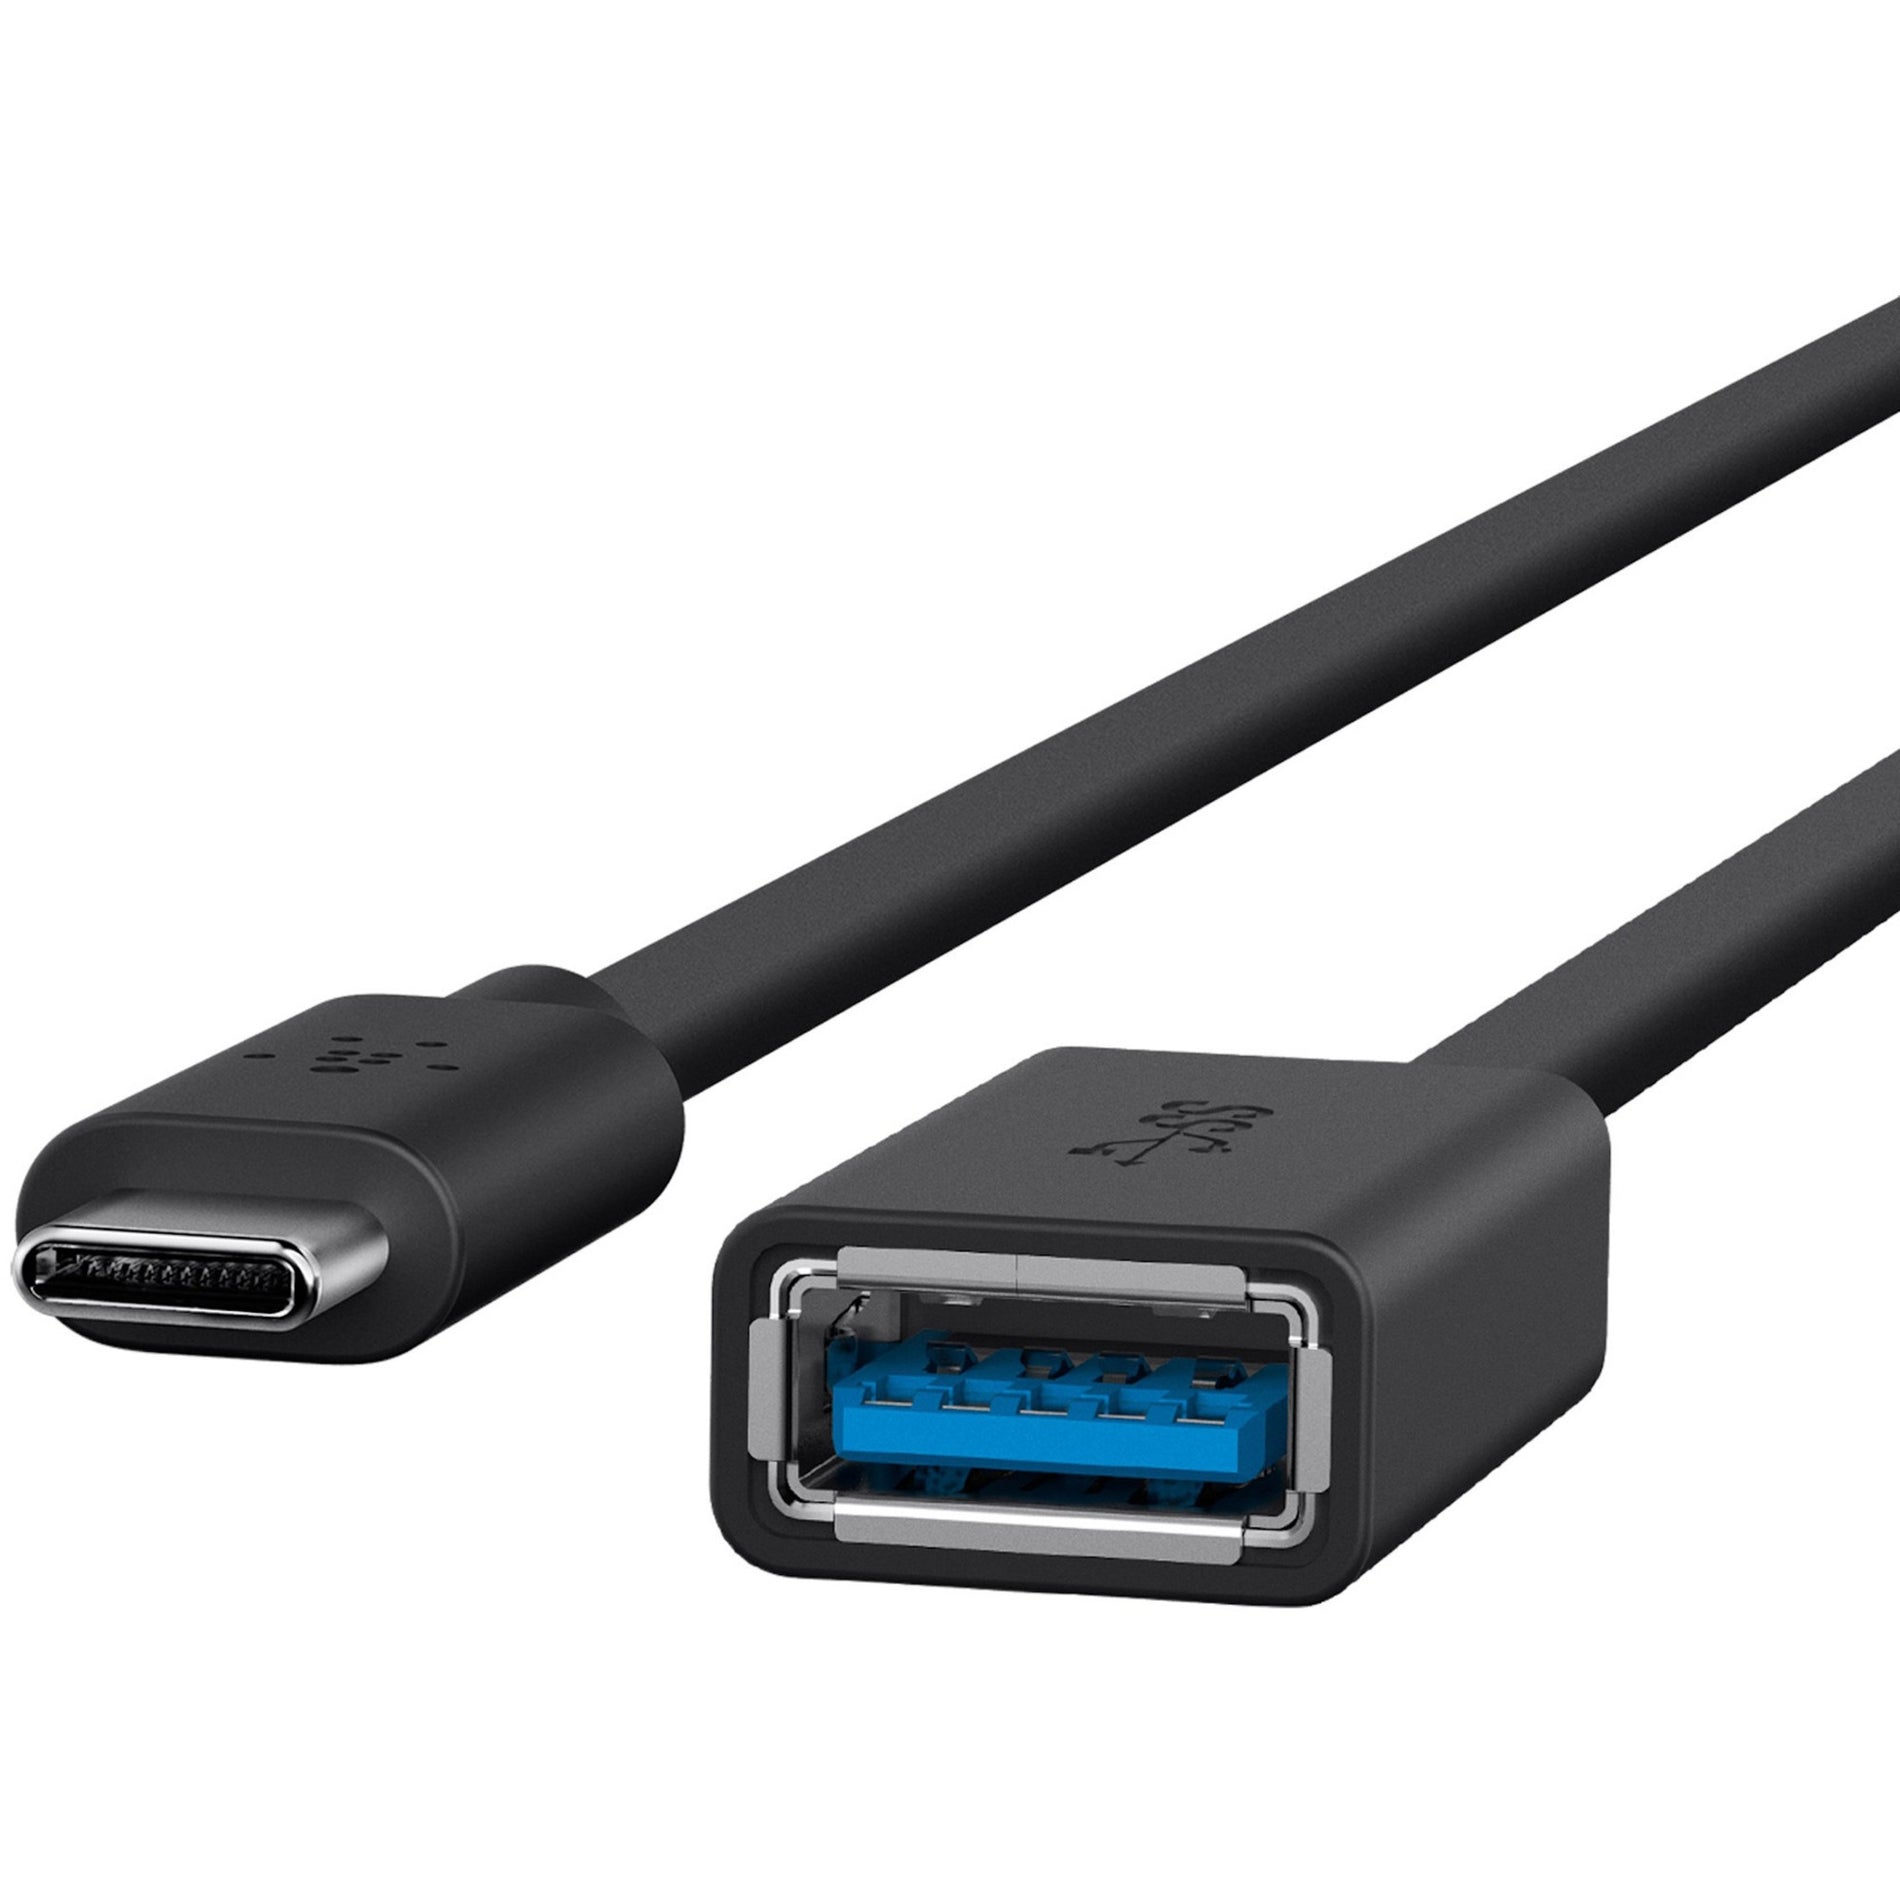 Cable de transferencia de datos USB B2B150-BLK Sync/Charge de Belkin reversible longitud de 6" negro. Marca: Belkin